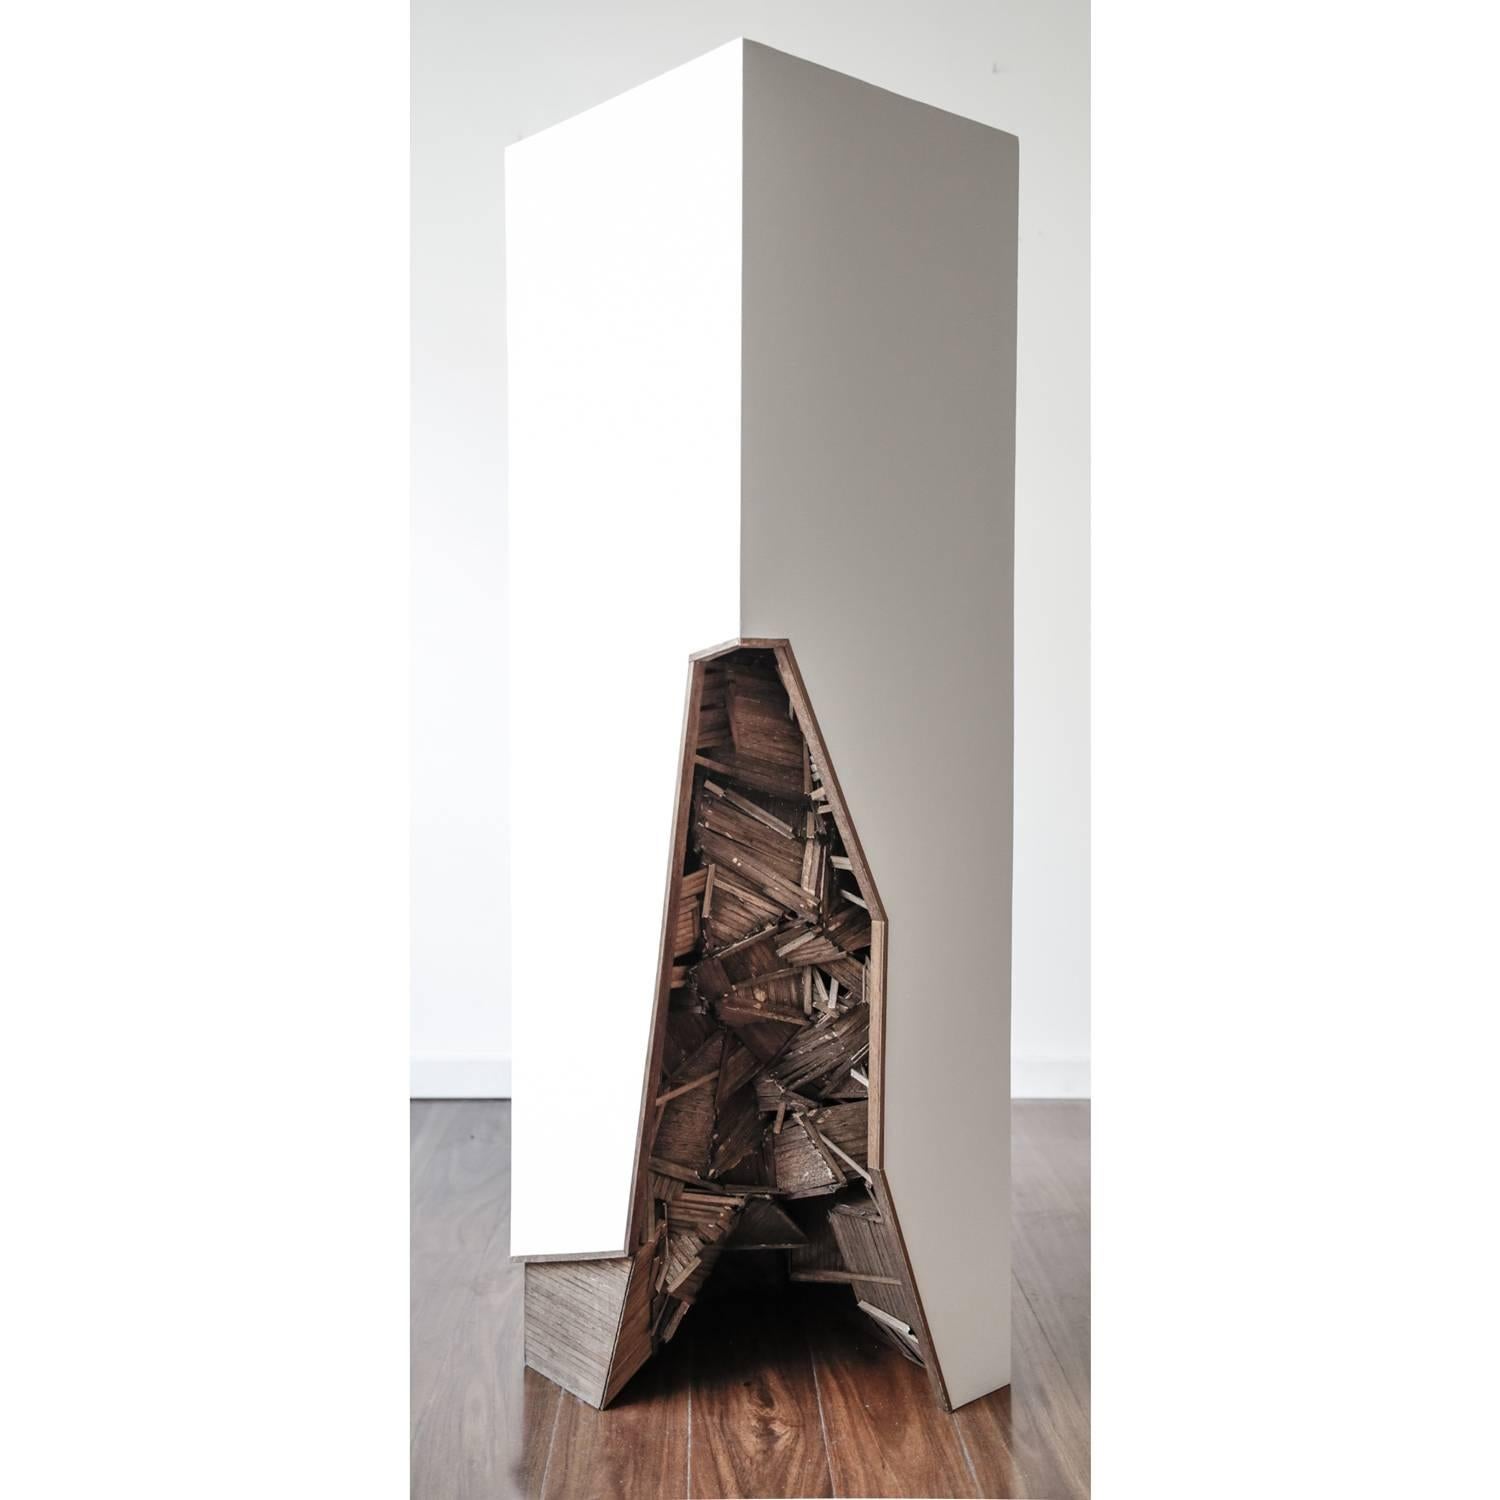 Seth Clark Abstract Sculpture - Pedestal Study I